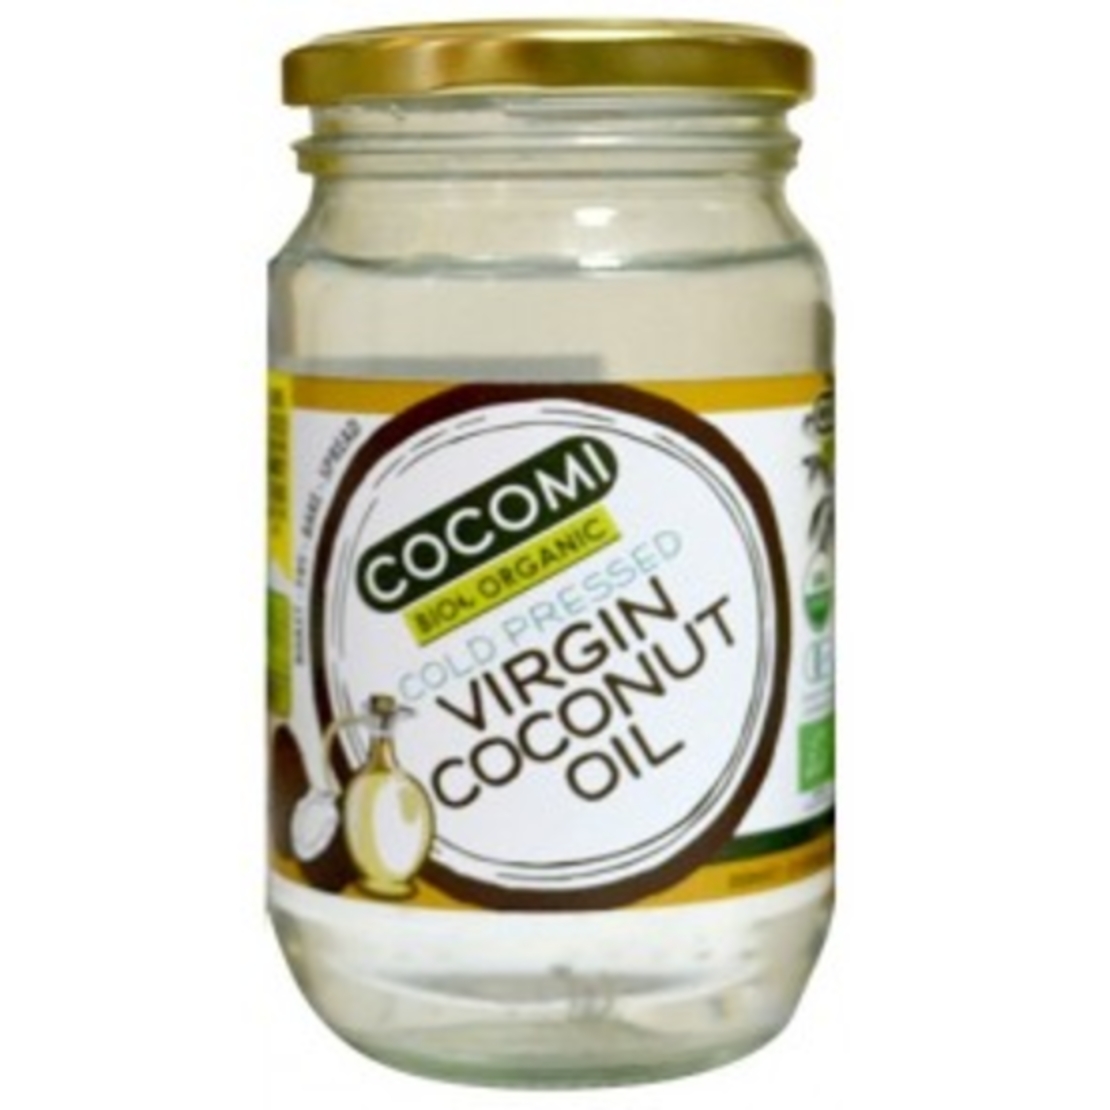 Cocomi - Virgin Coconut Oil 350ml